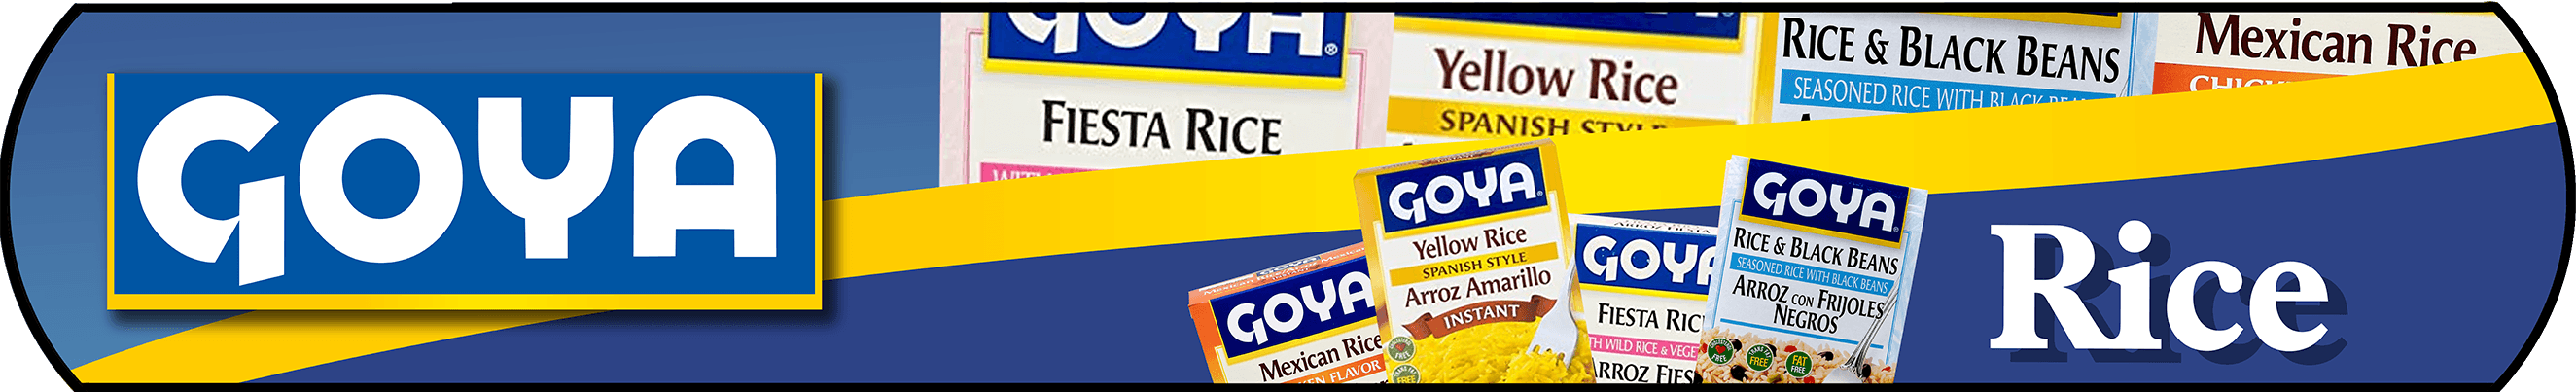 Goya Rice Banner